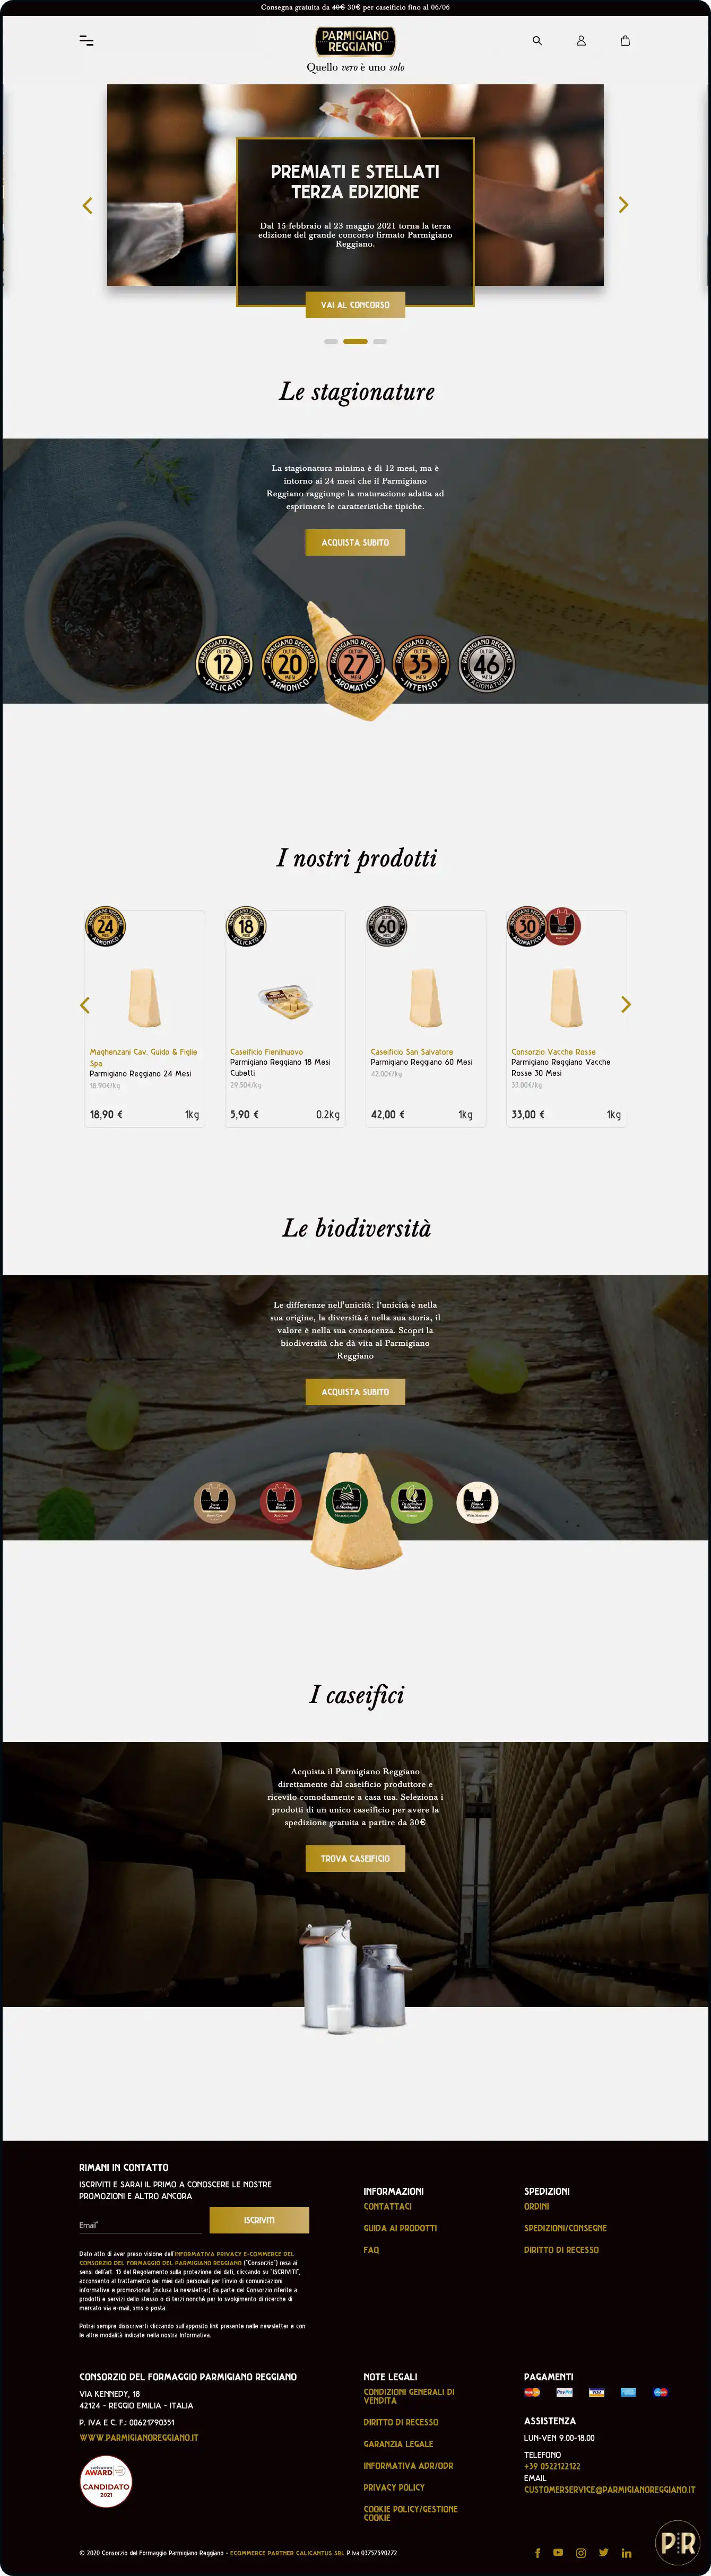 shop Parmigiano Reggiano homepage - Spotview